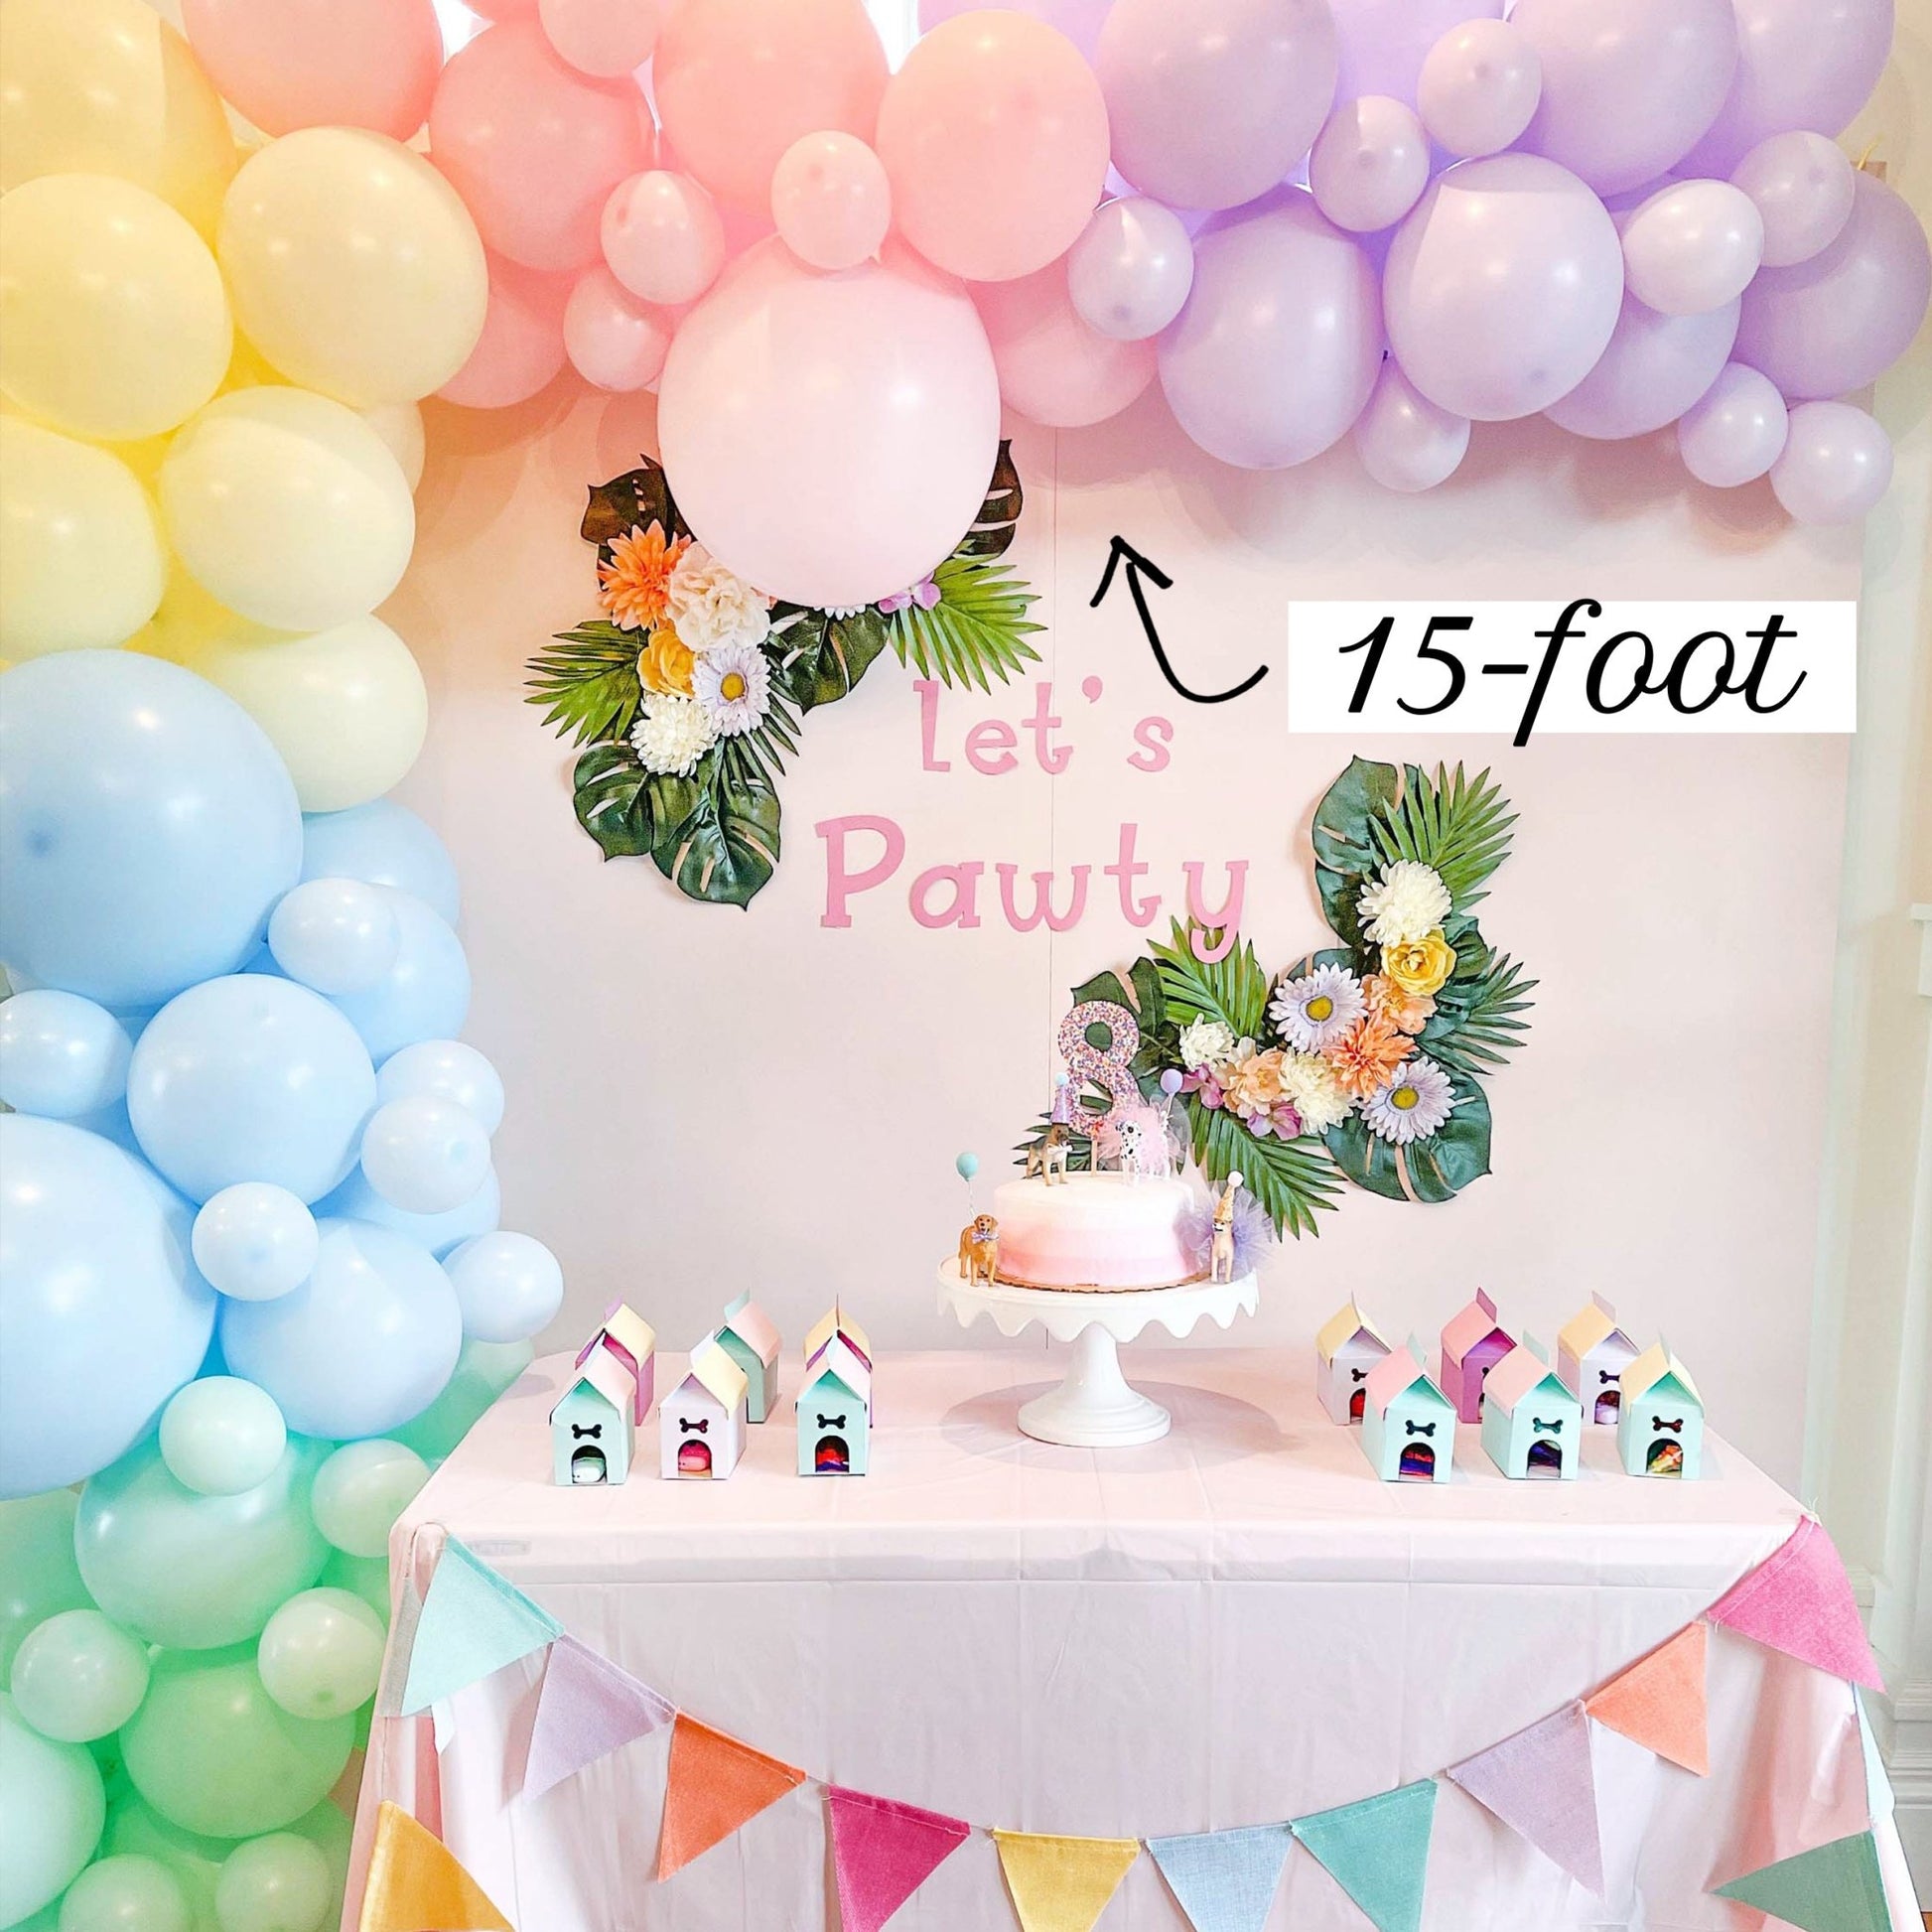 191Pcs Pastel Balloons Garland Arch Kit-Pastel Rainbow Party